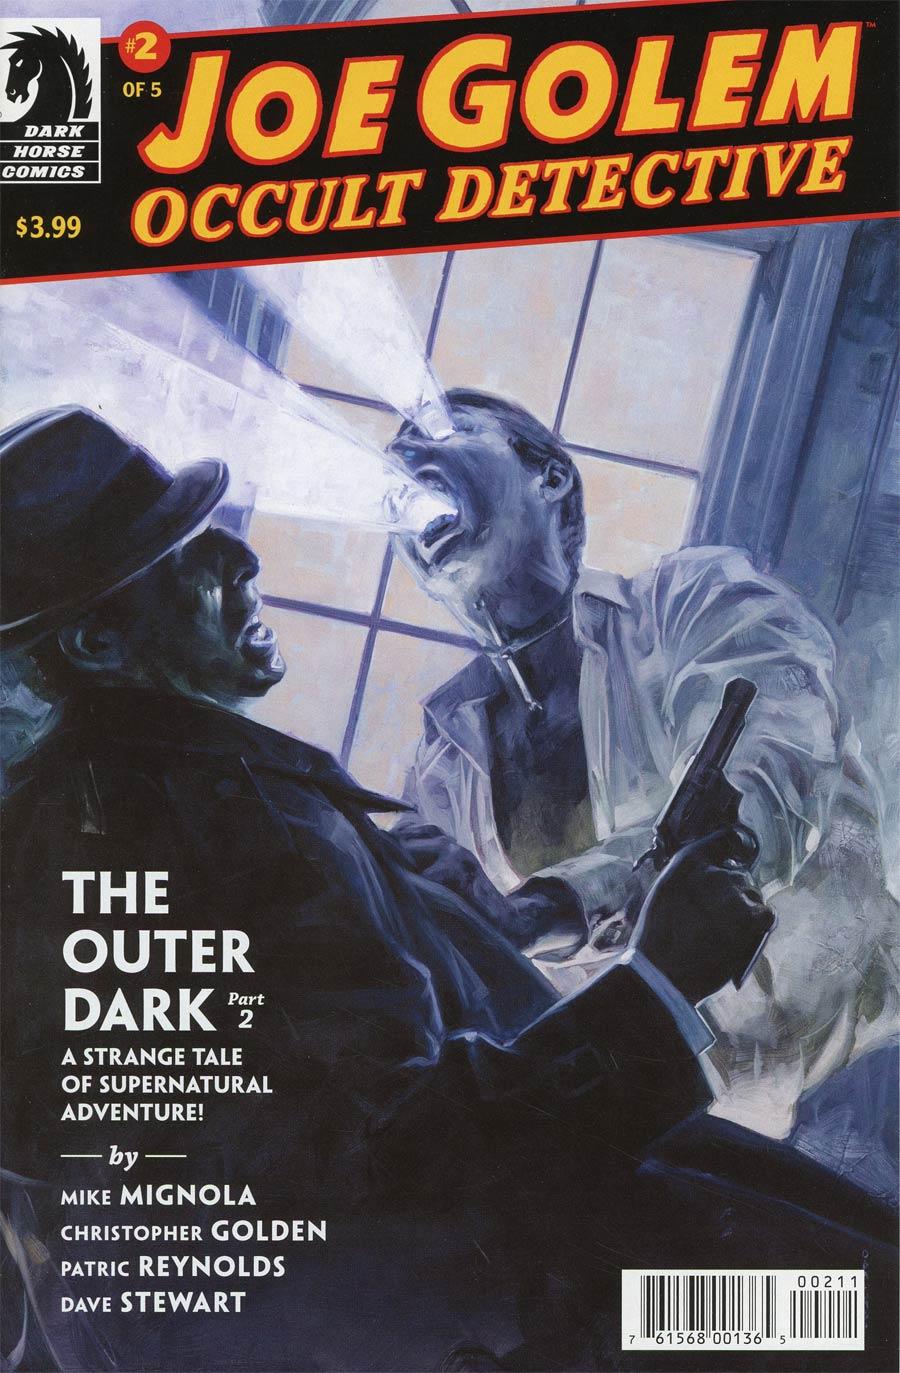 Joe Golem Occult Detective Outer Dark Vol. 1 #2